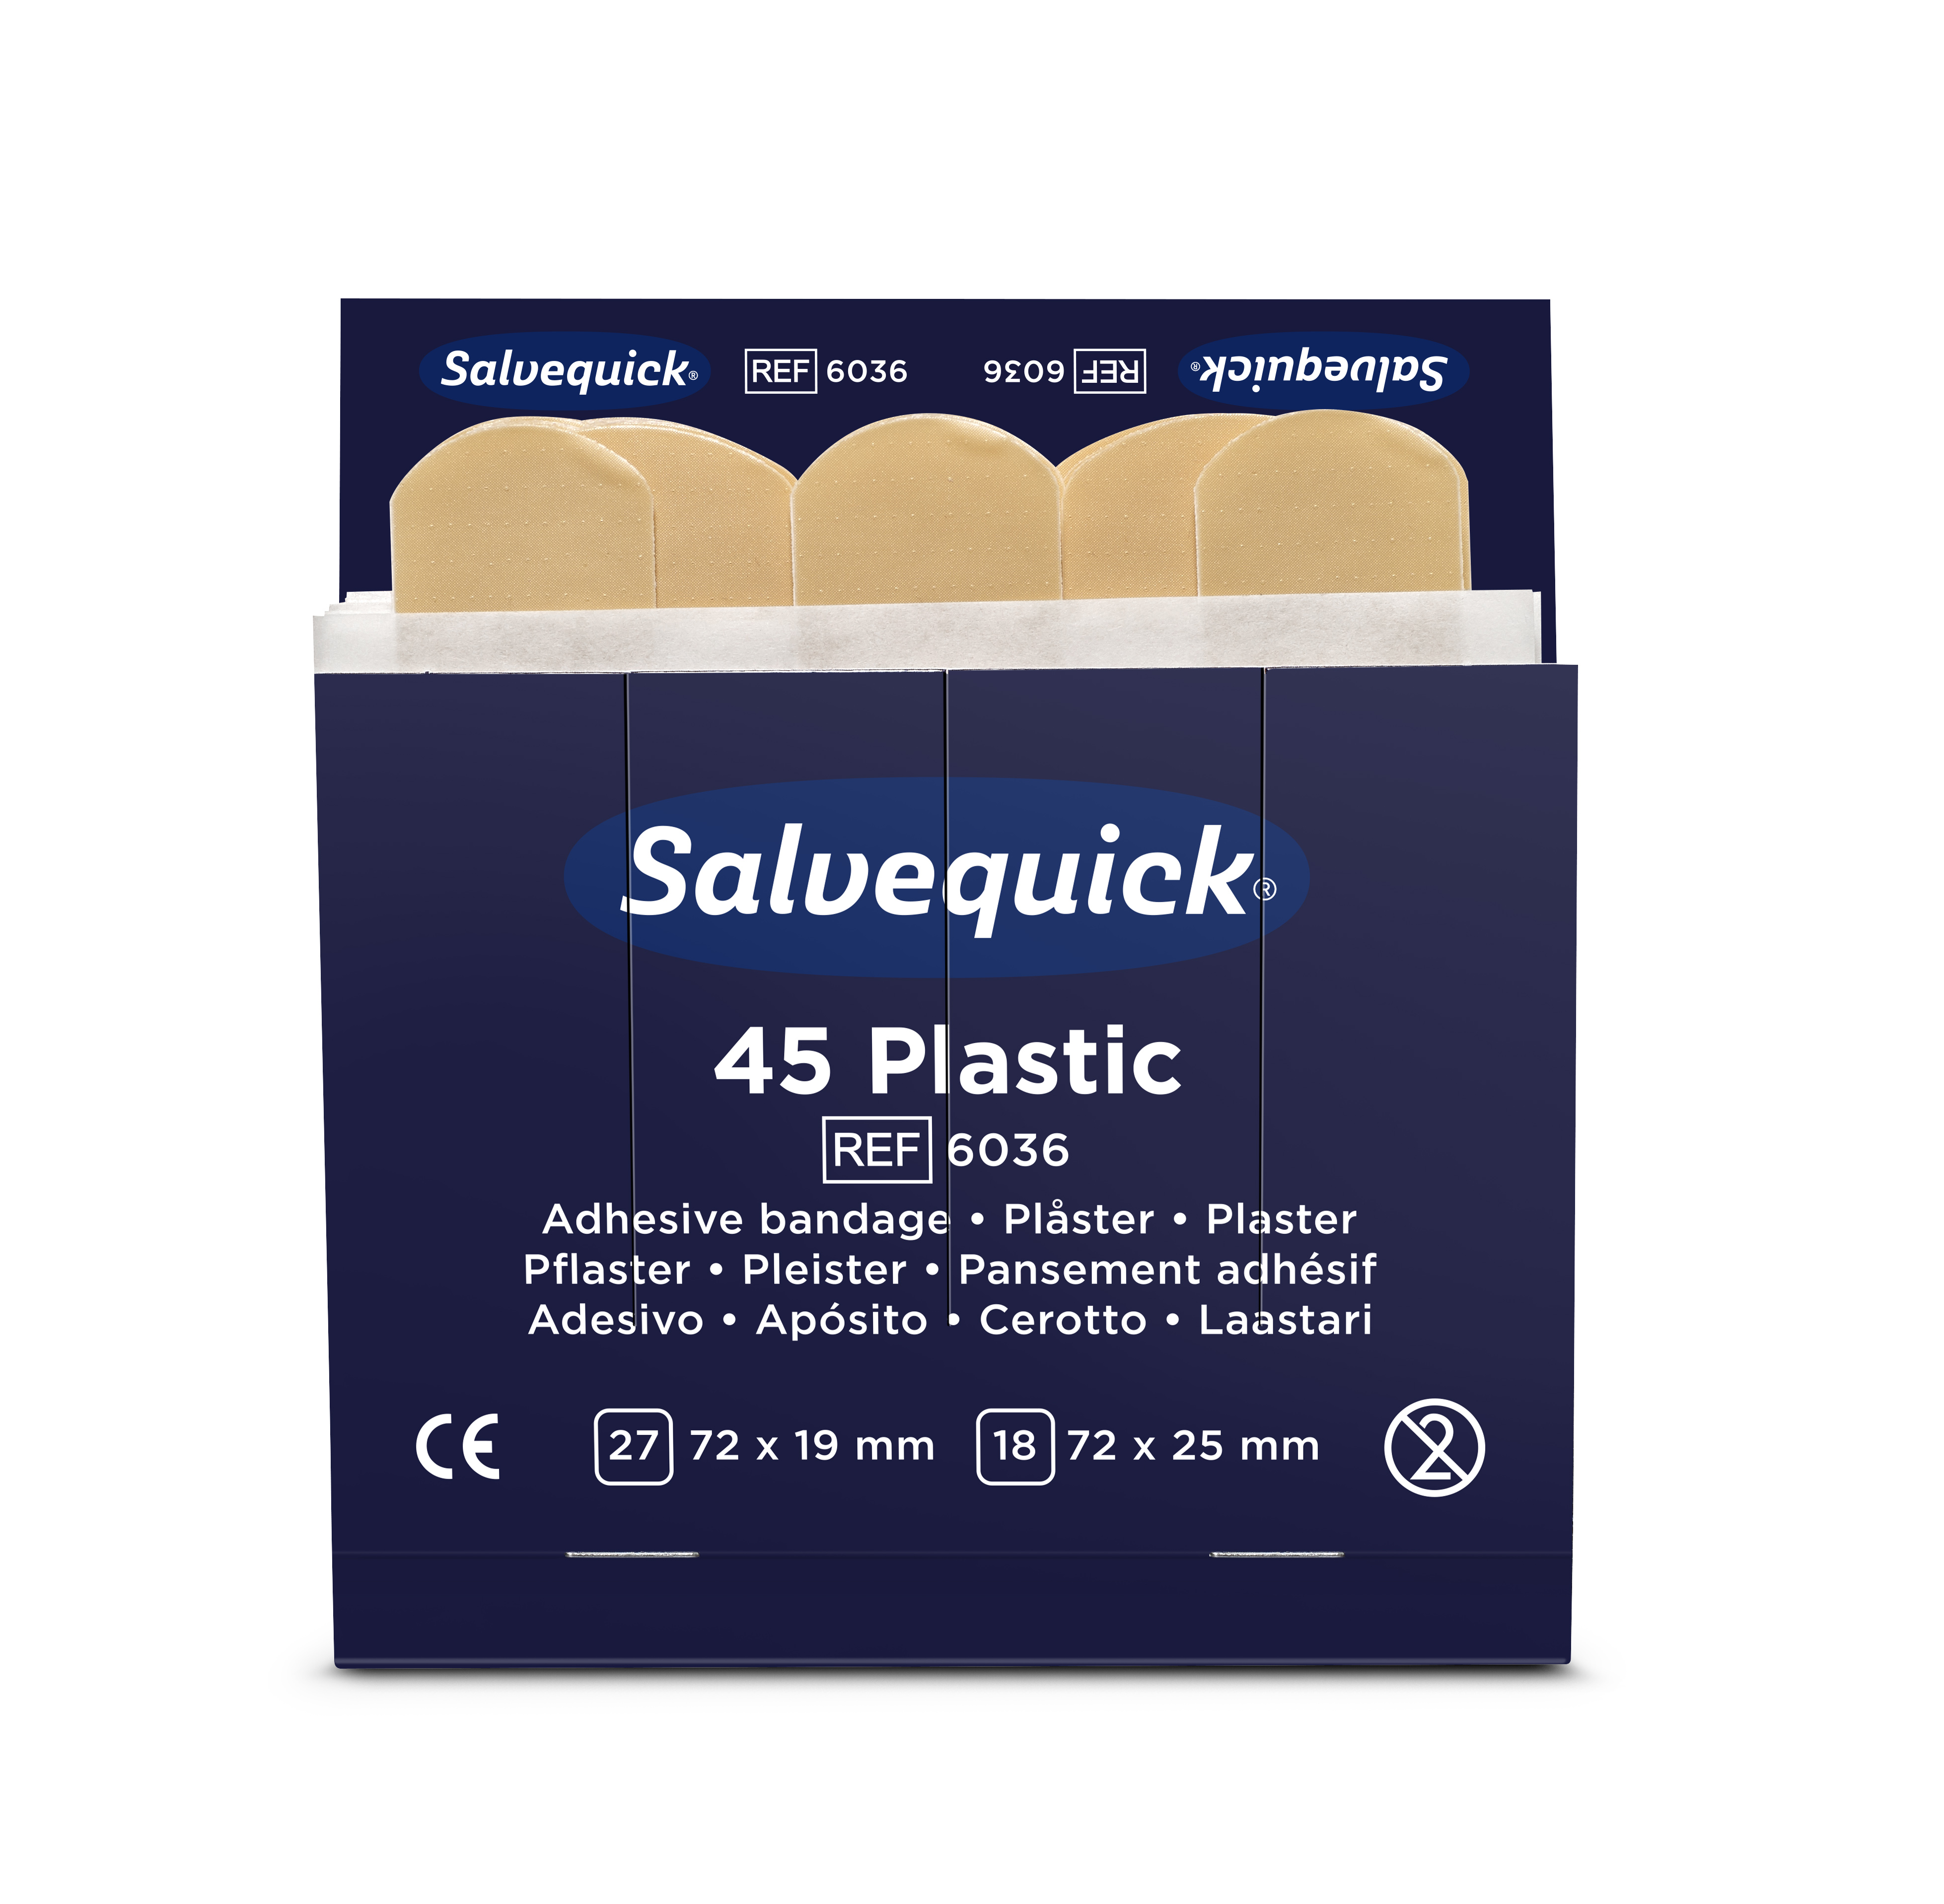 6036-Salvequick-Plastic-Plaster-Front